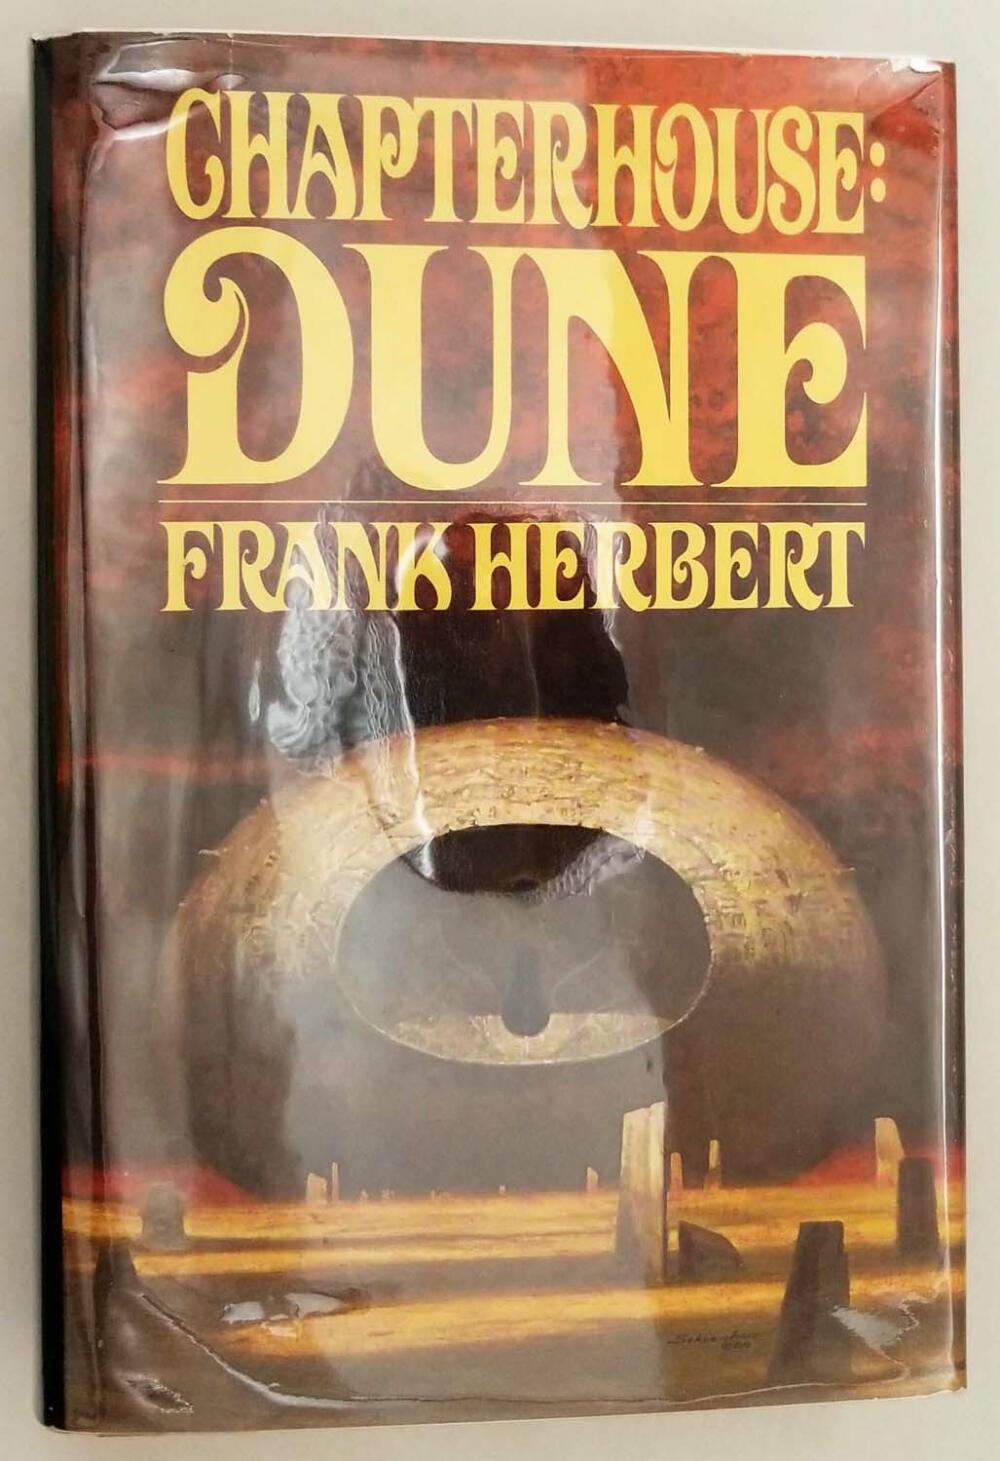 Chapterhouse: Dune - Frank Herbert 1985 | 1st Edition